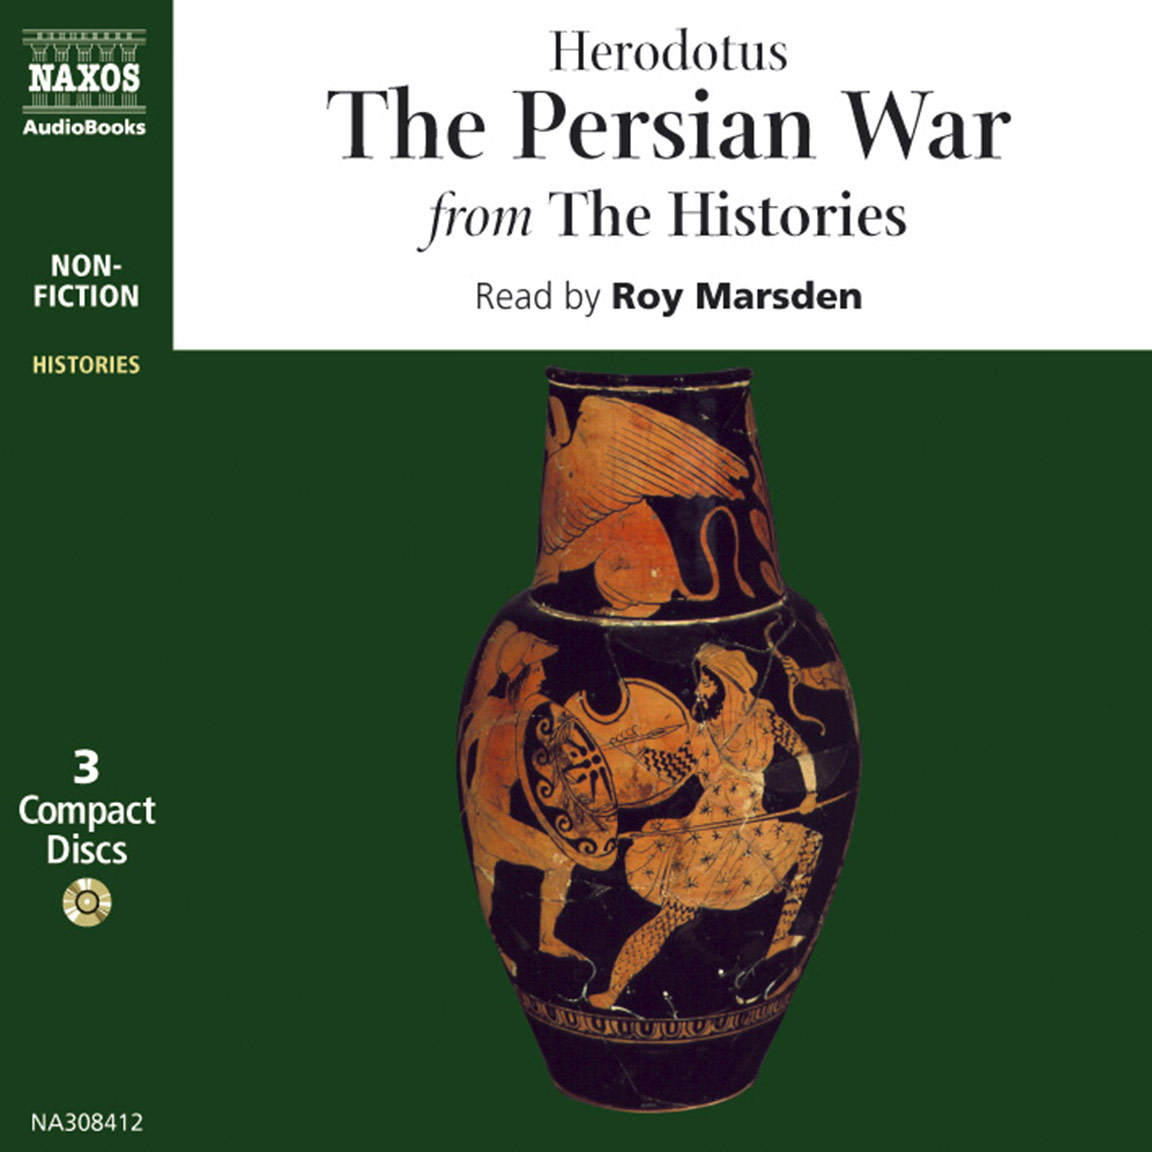 Persian War